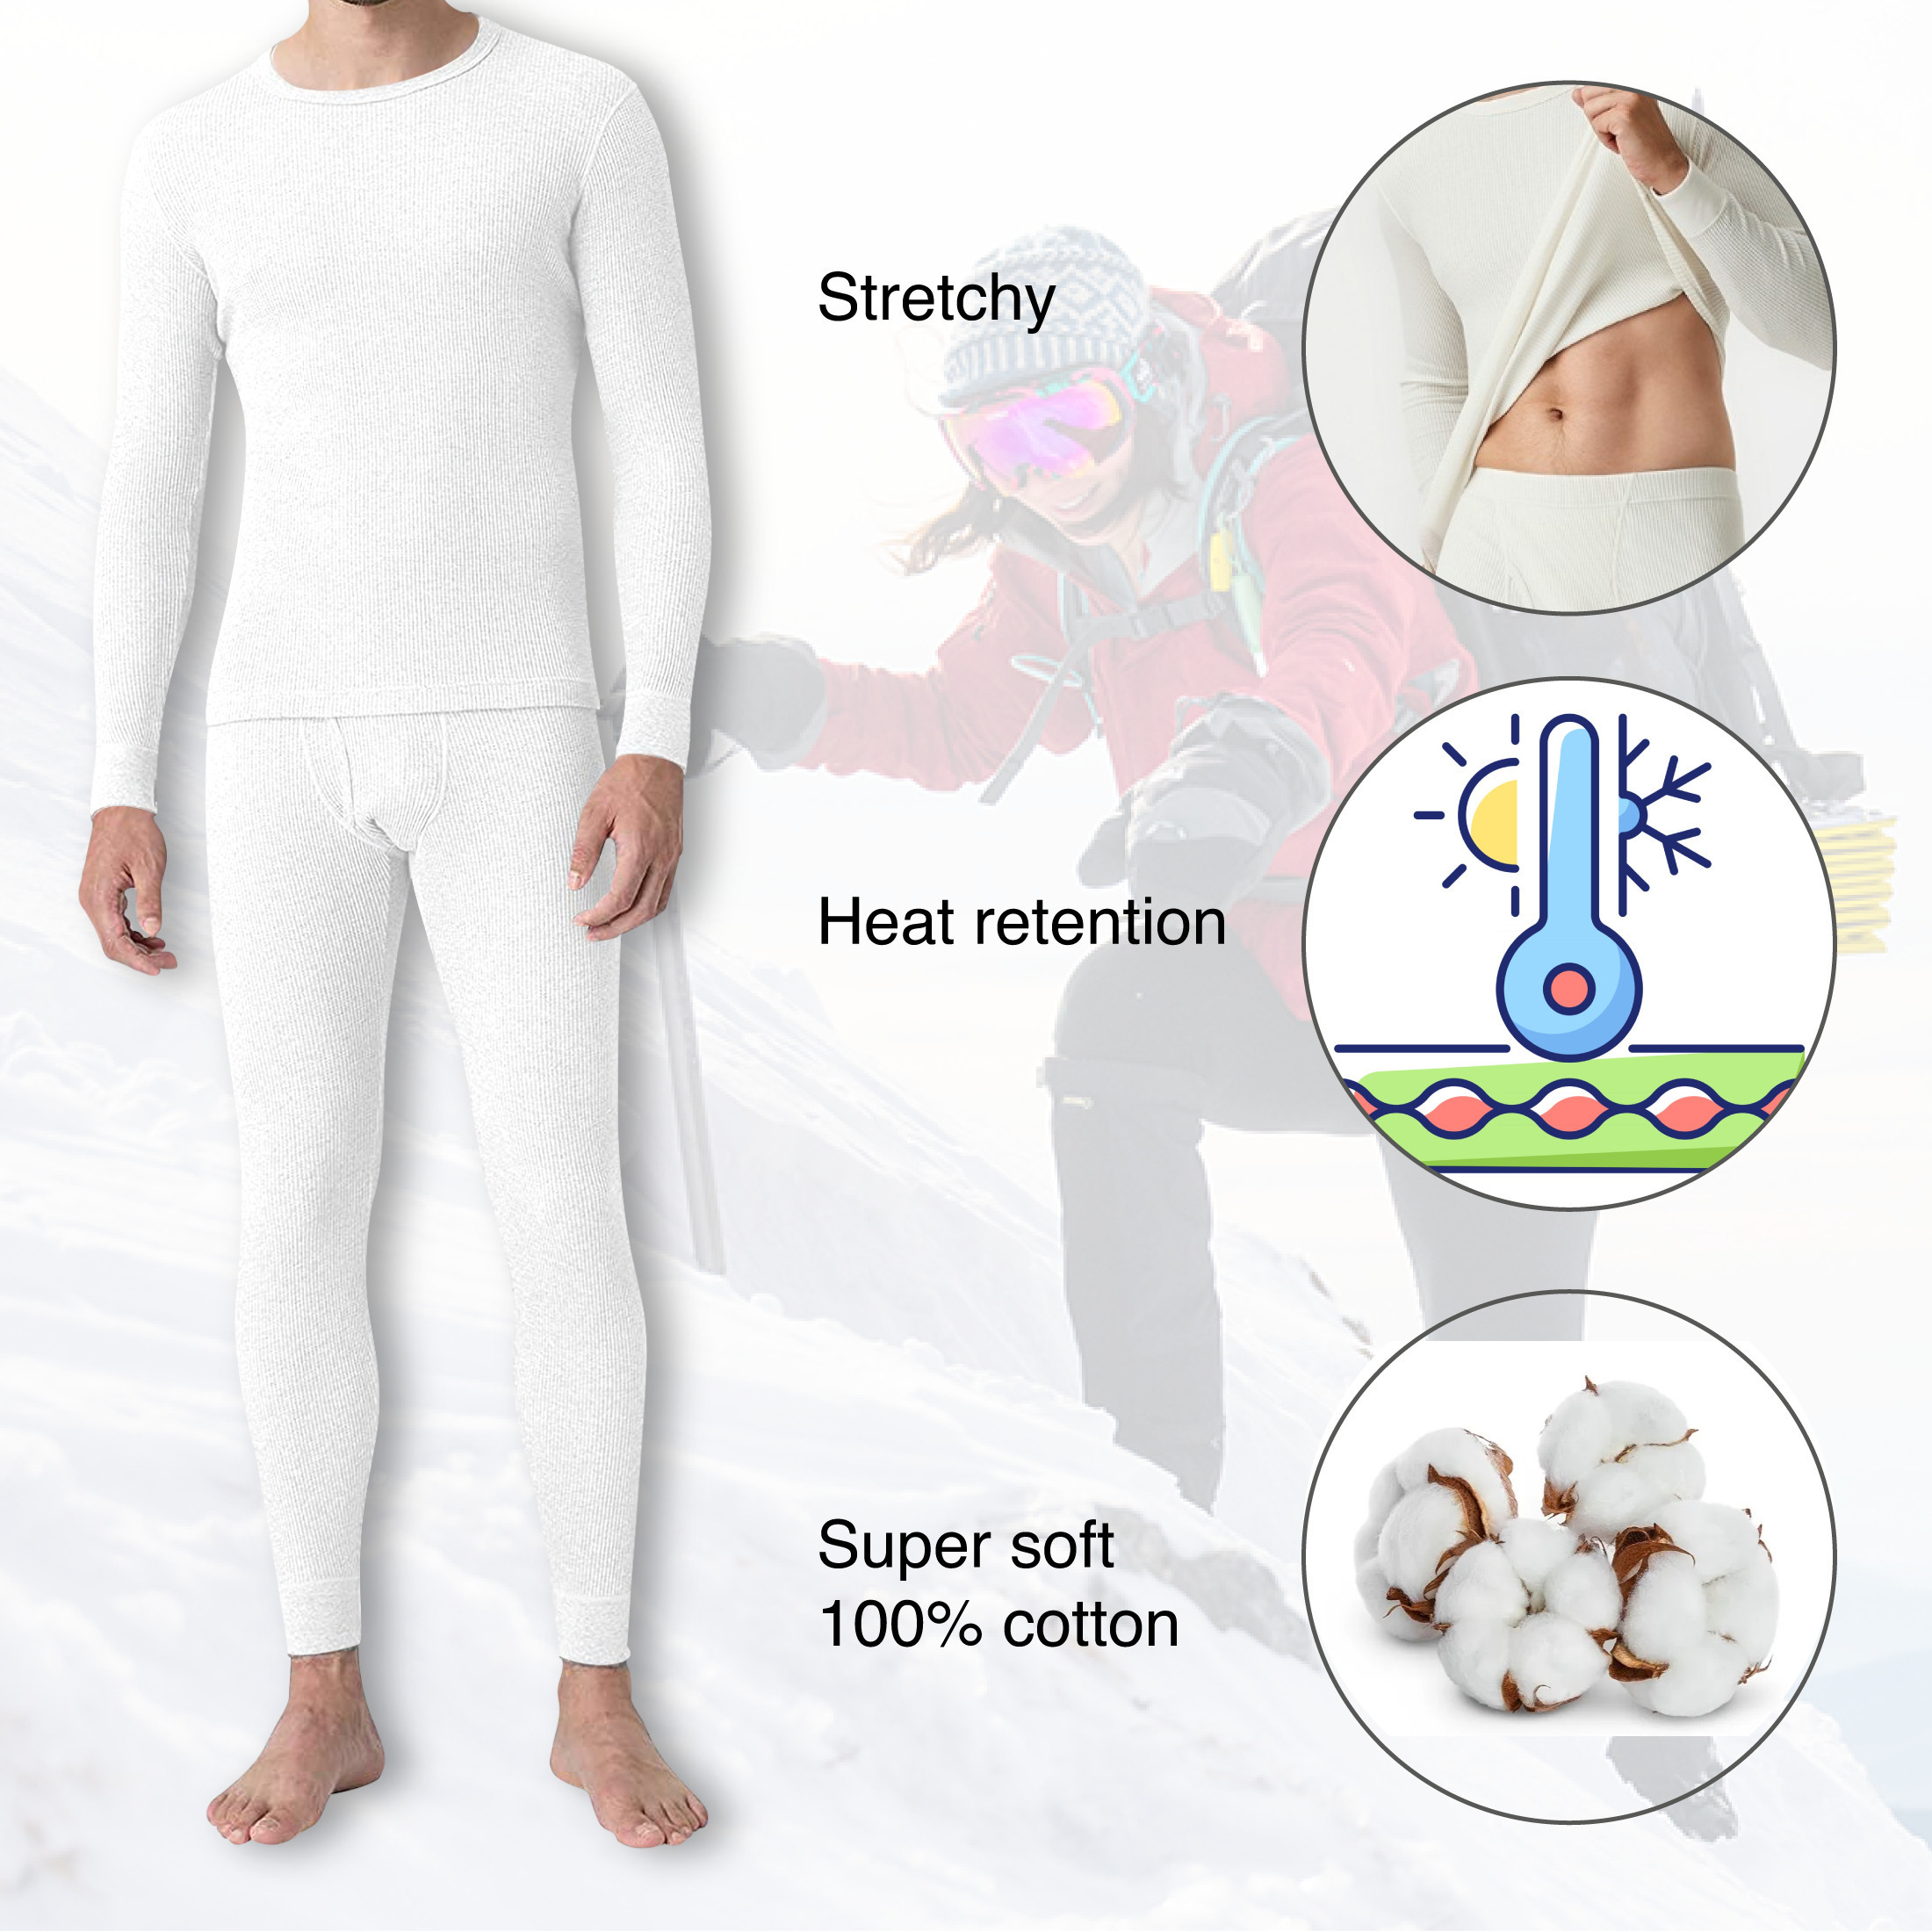 2-Sets: Men's Super Soft Cotton Waffle Knit Winter Thermal Underwear Set - Navy & Navy, 2X-Large